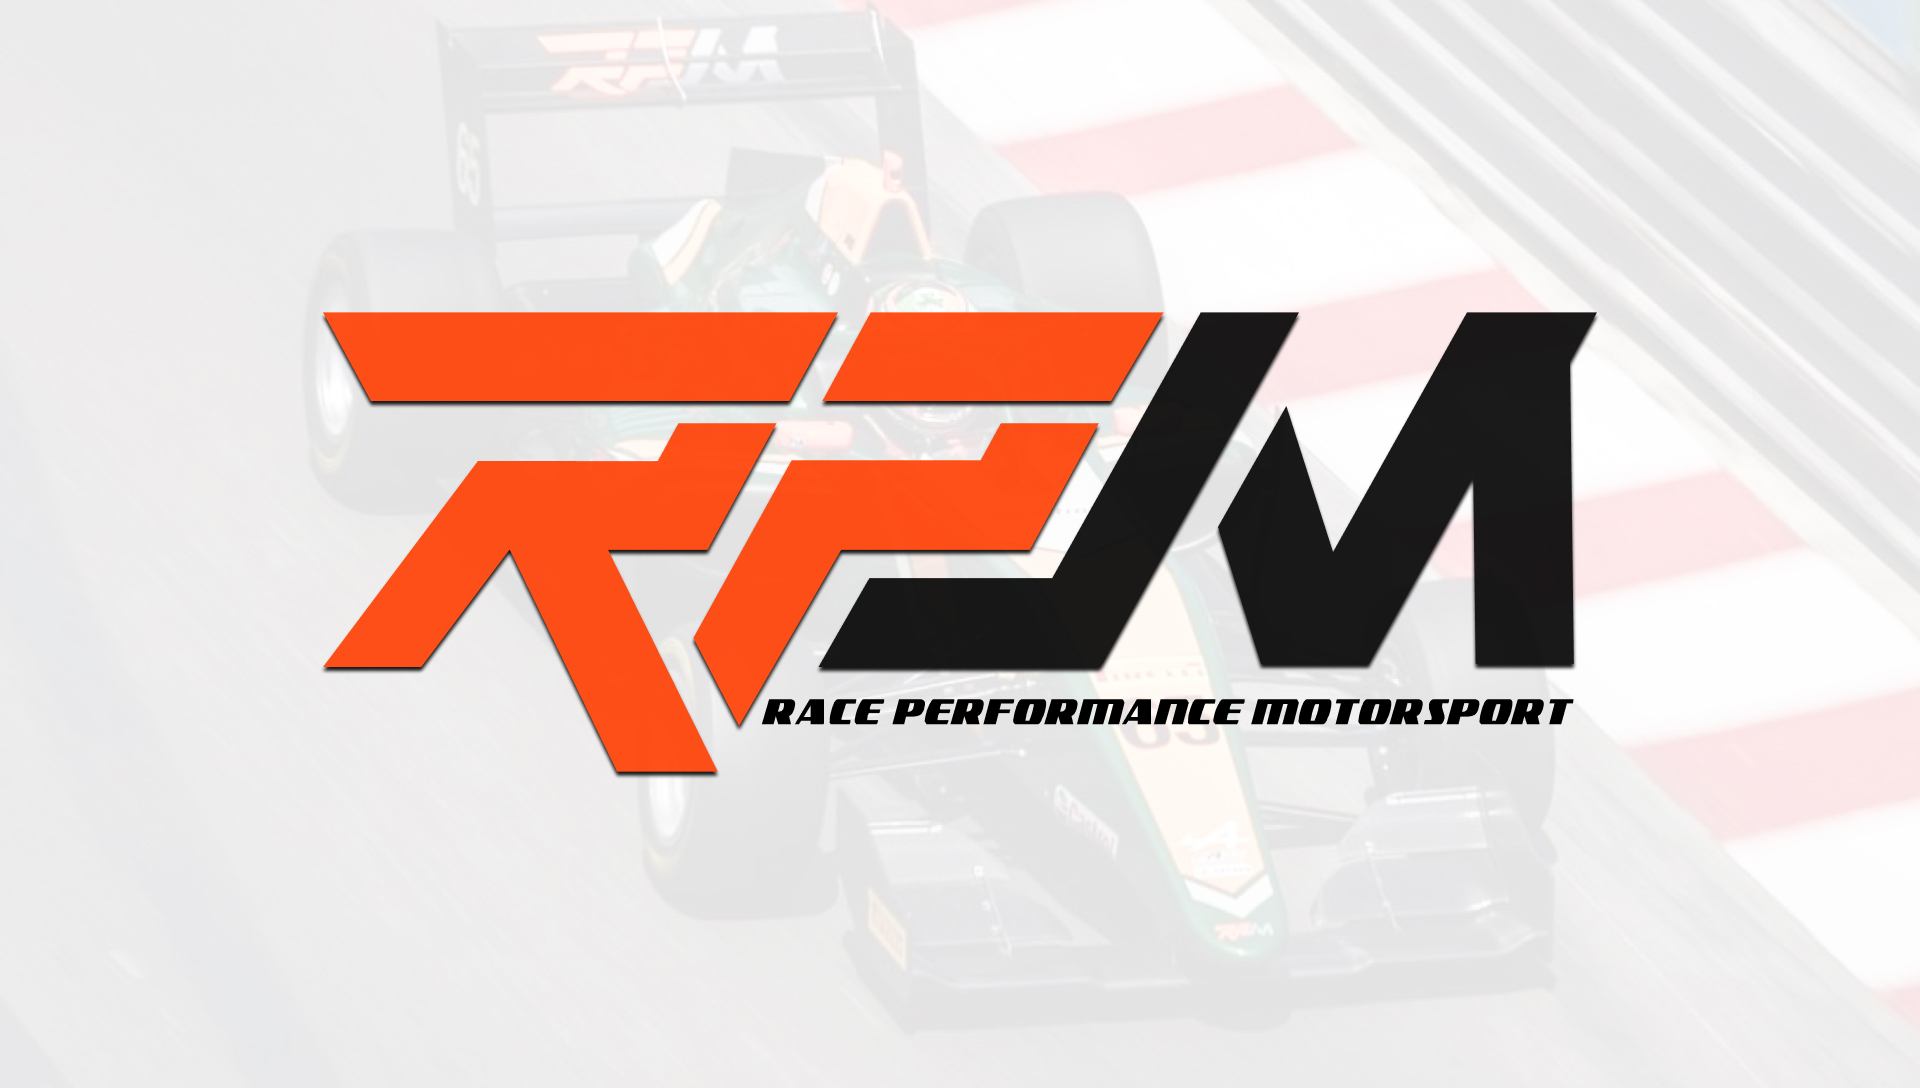 Race Performance Motorsport